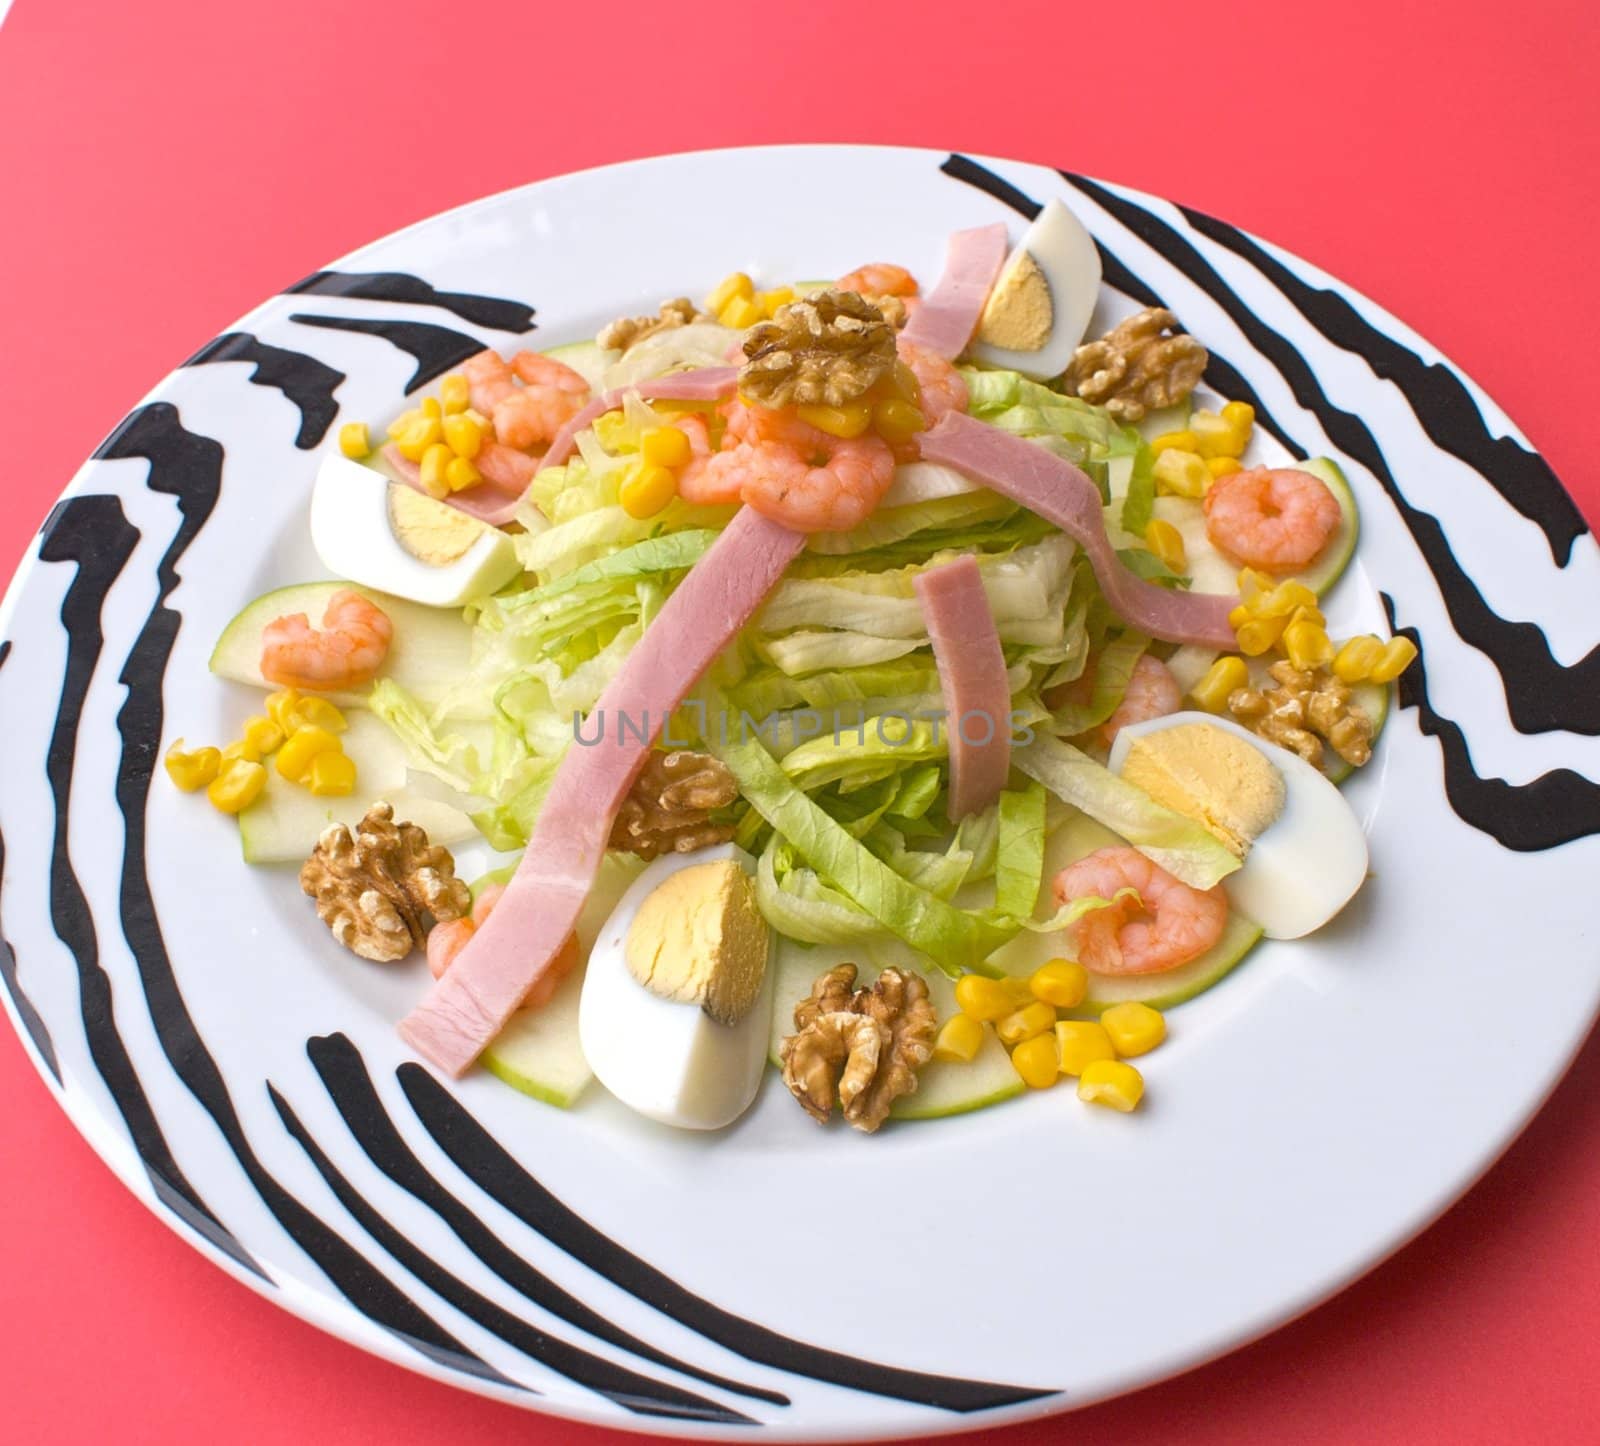 Colorfull salad plate for restaurant